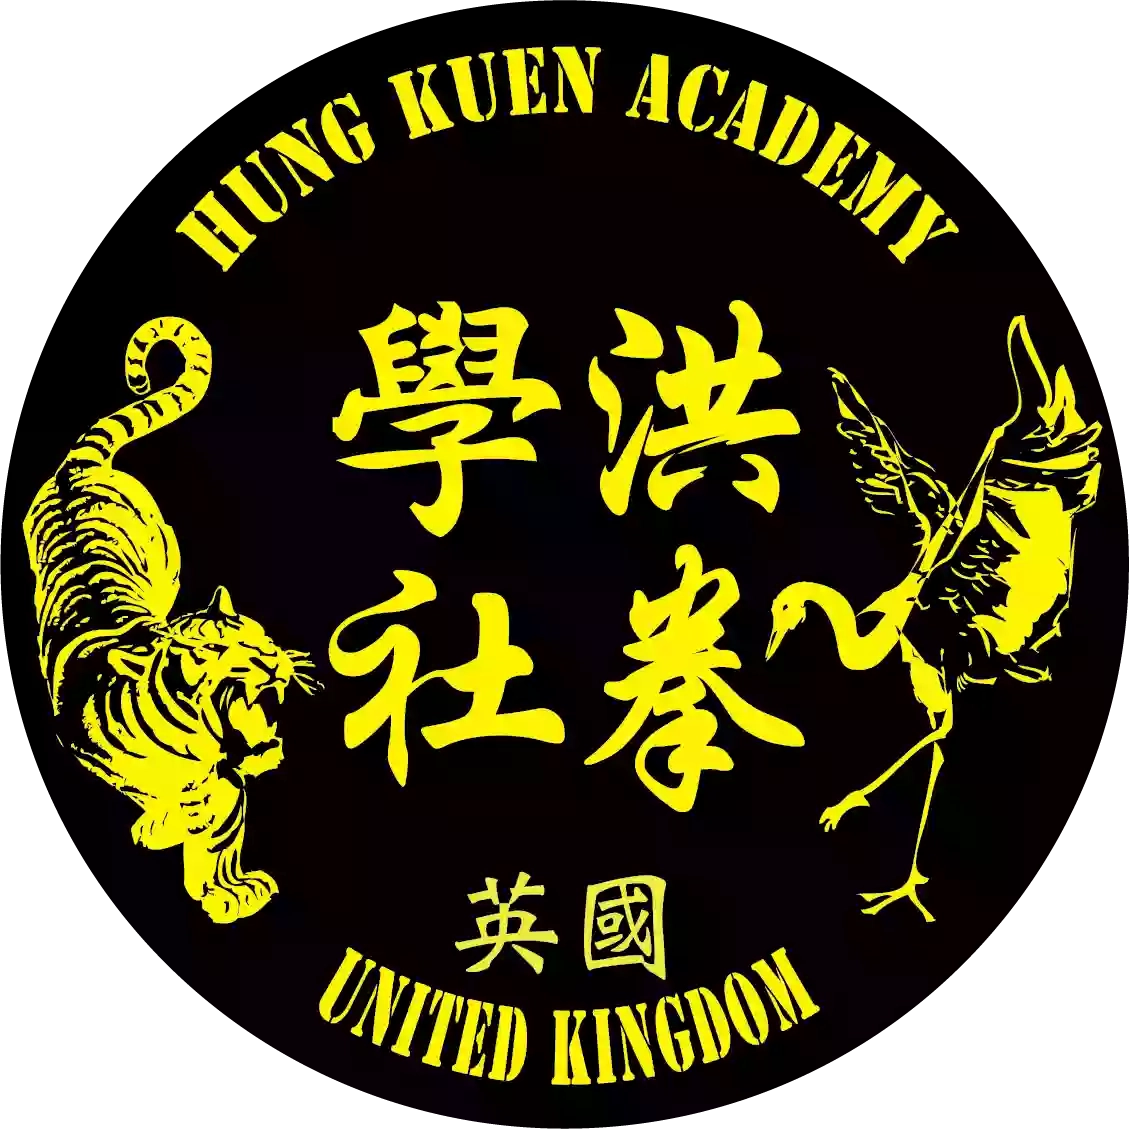 Traditional Kung Fu - Hung Kuen Academy UK